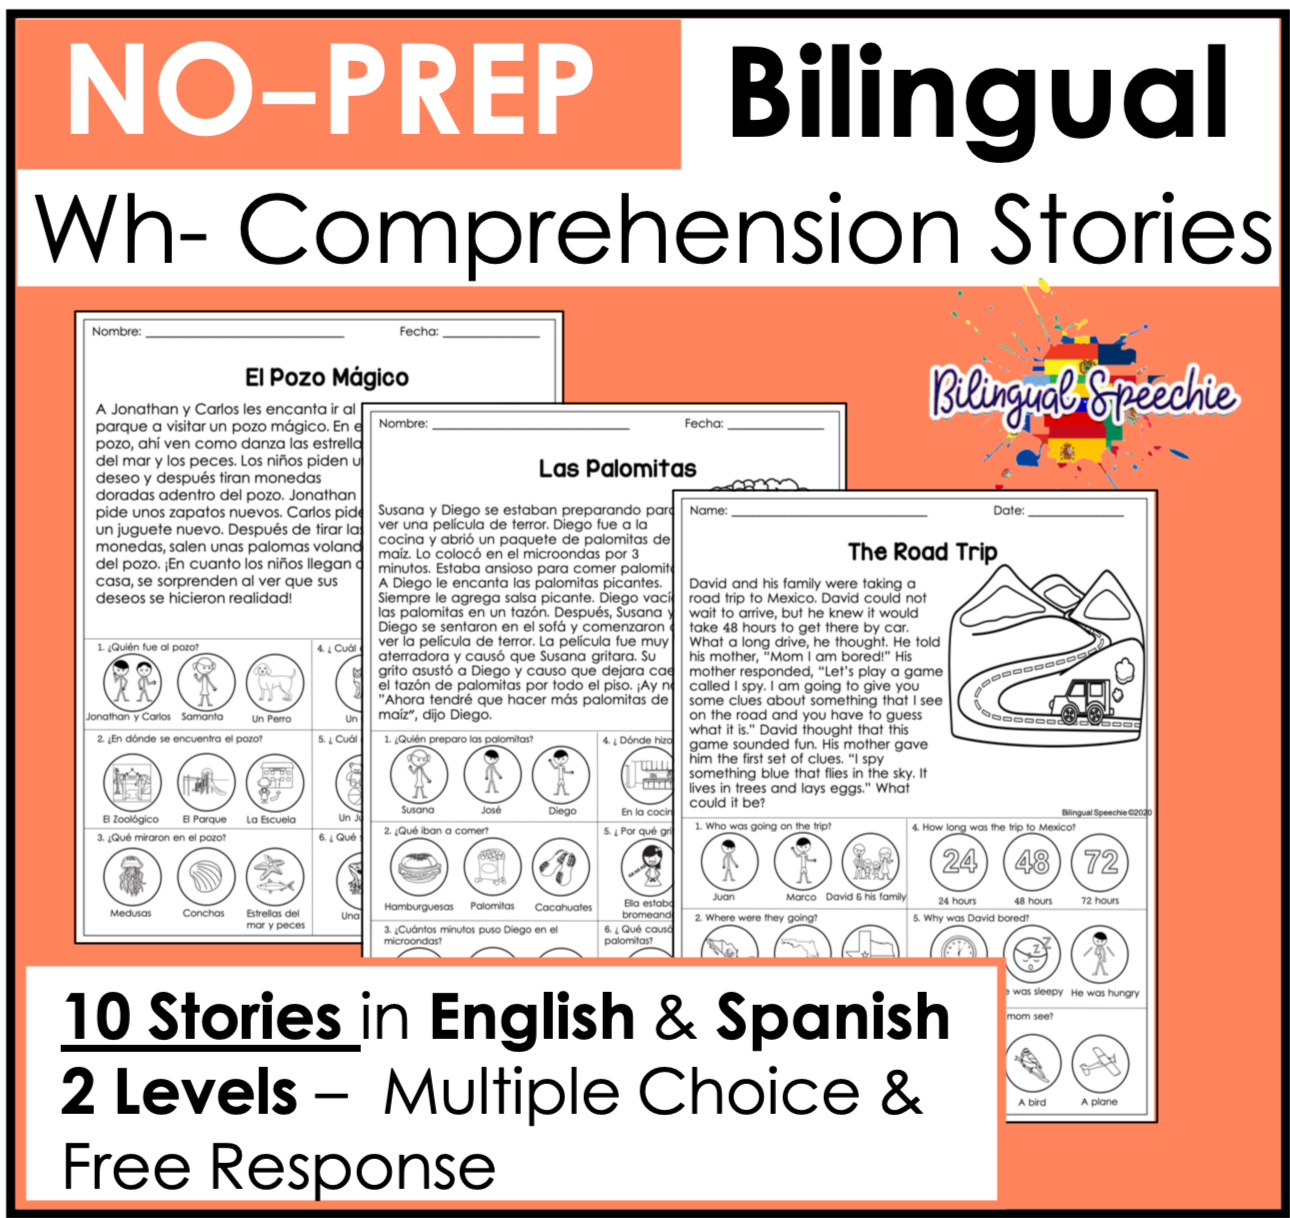 Bilingual Wh- Comprehension Stories | English & Spanish